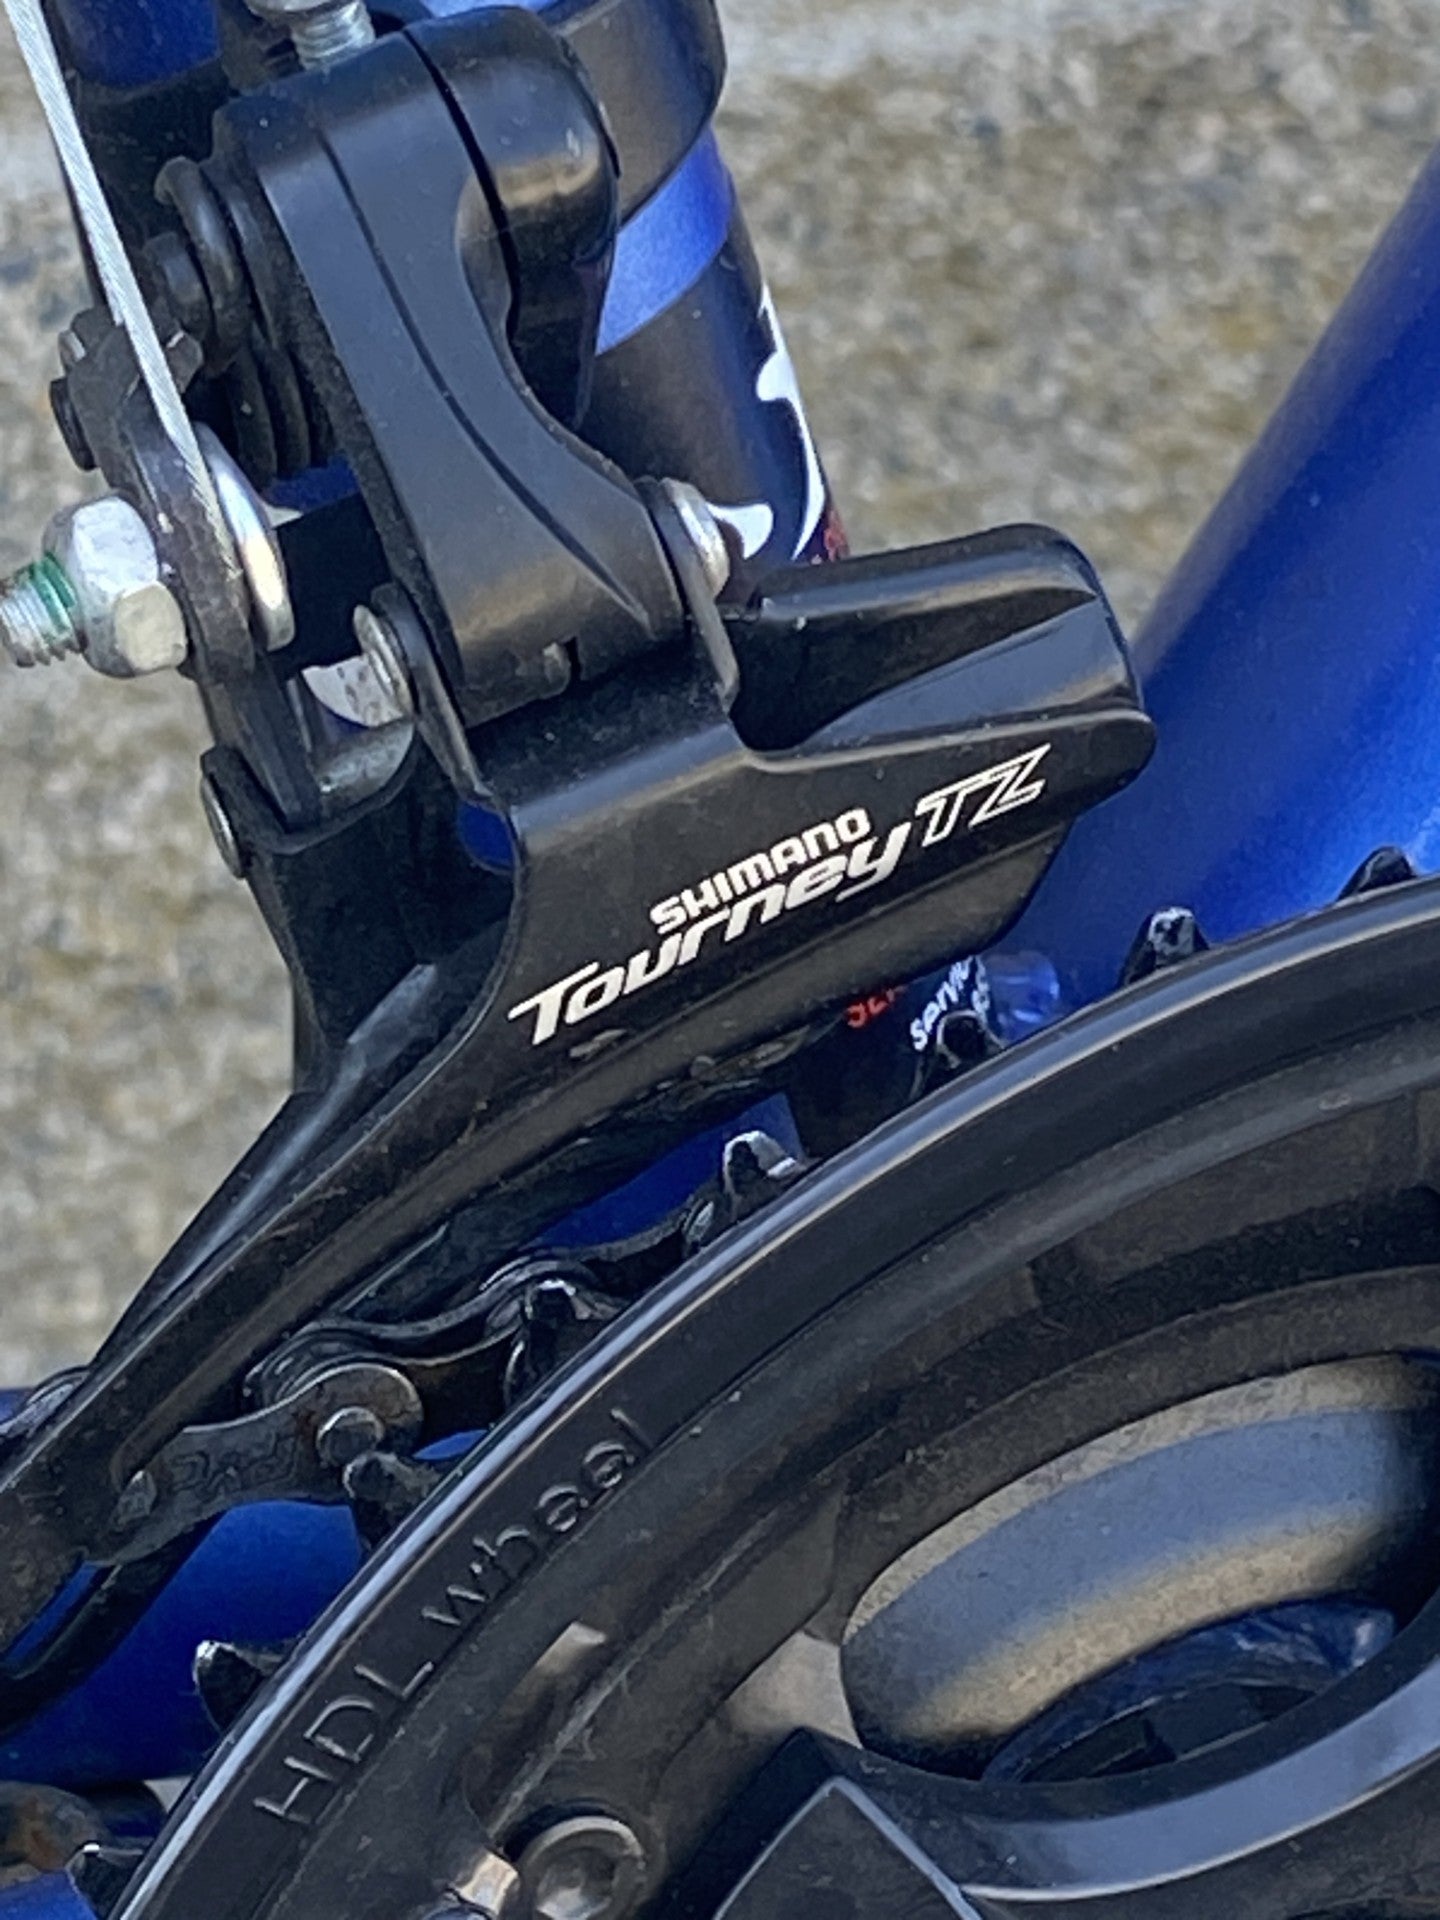 Supercycle Tekoa Mtn Bike Sz 17 Med Blue-Sports Replay - Sports Excellence-Sports Replay - Sports Excellence